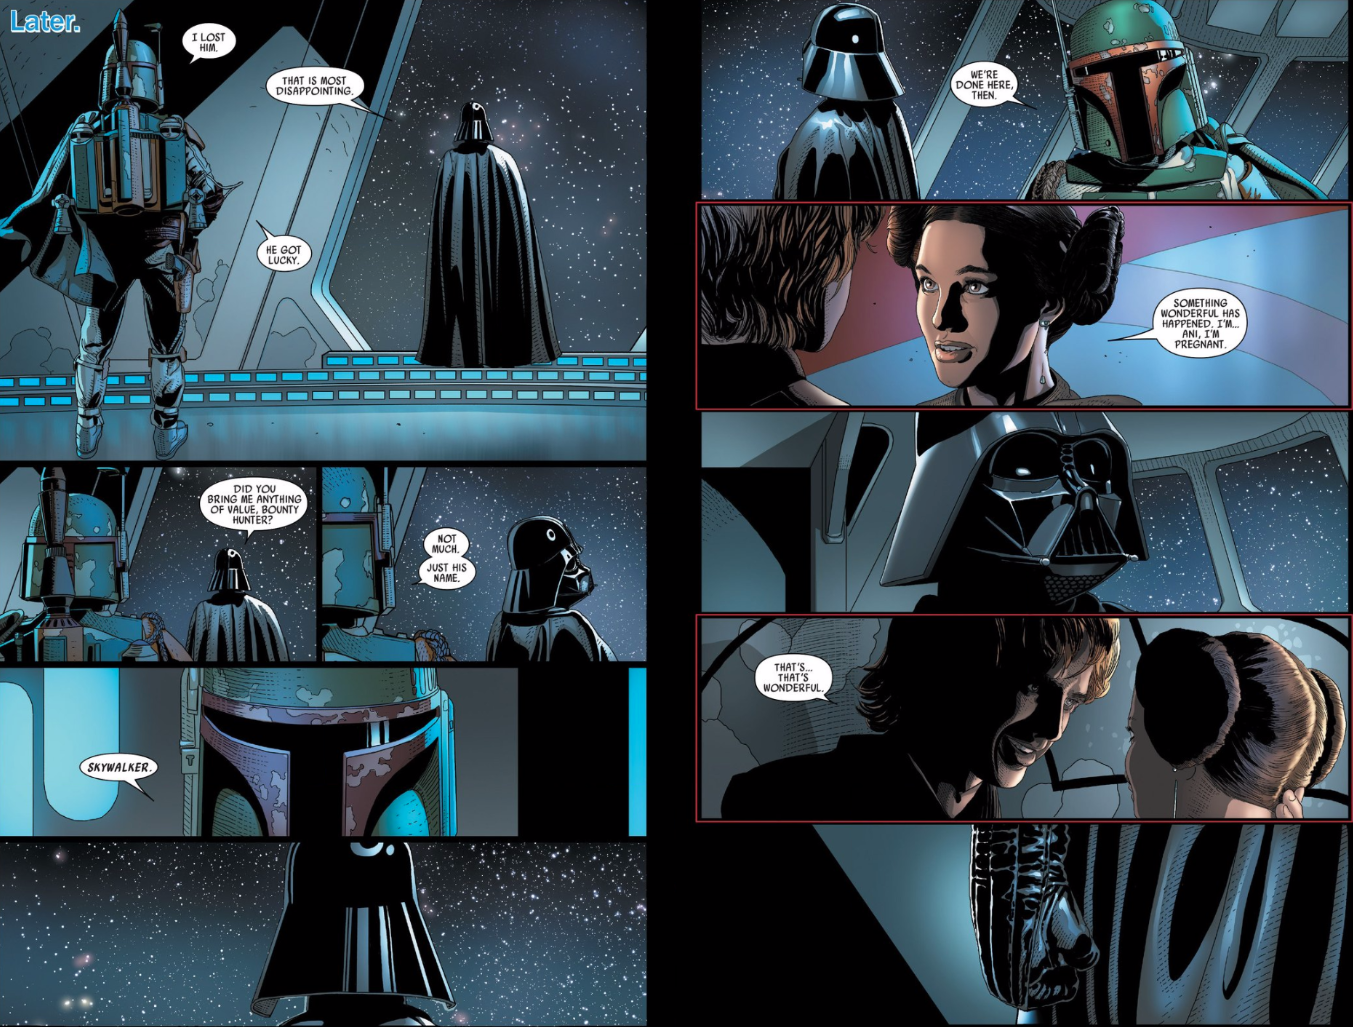 Skywalker Revelation 15 Facts About Darth Vader That Even Die-Hard Fans Don't Know